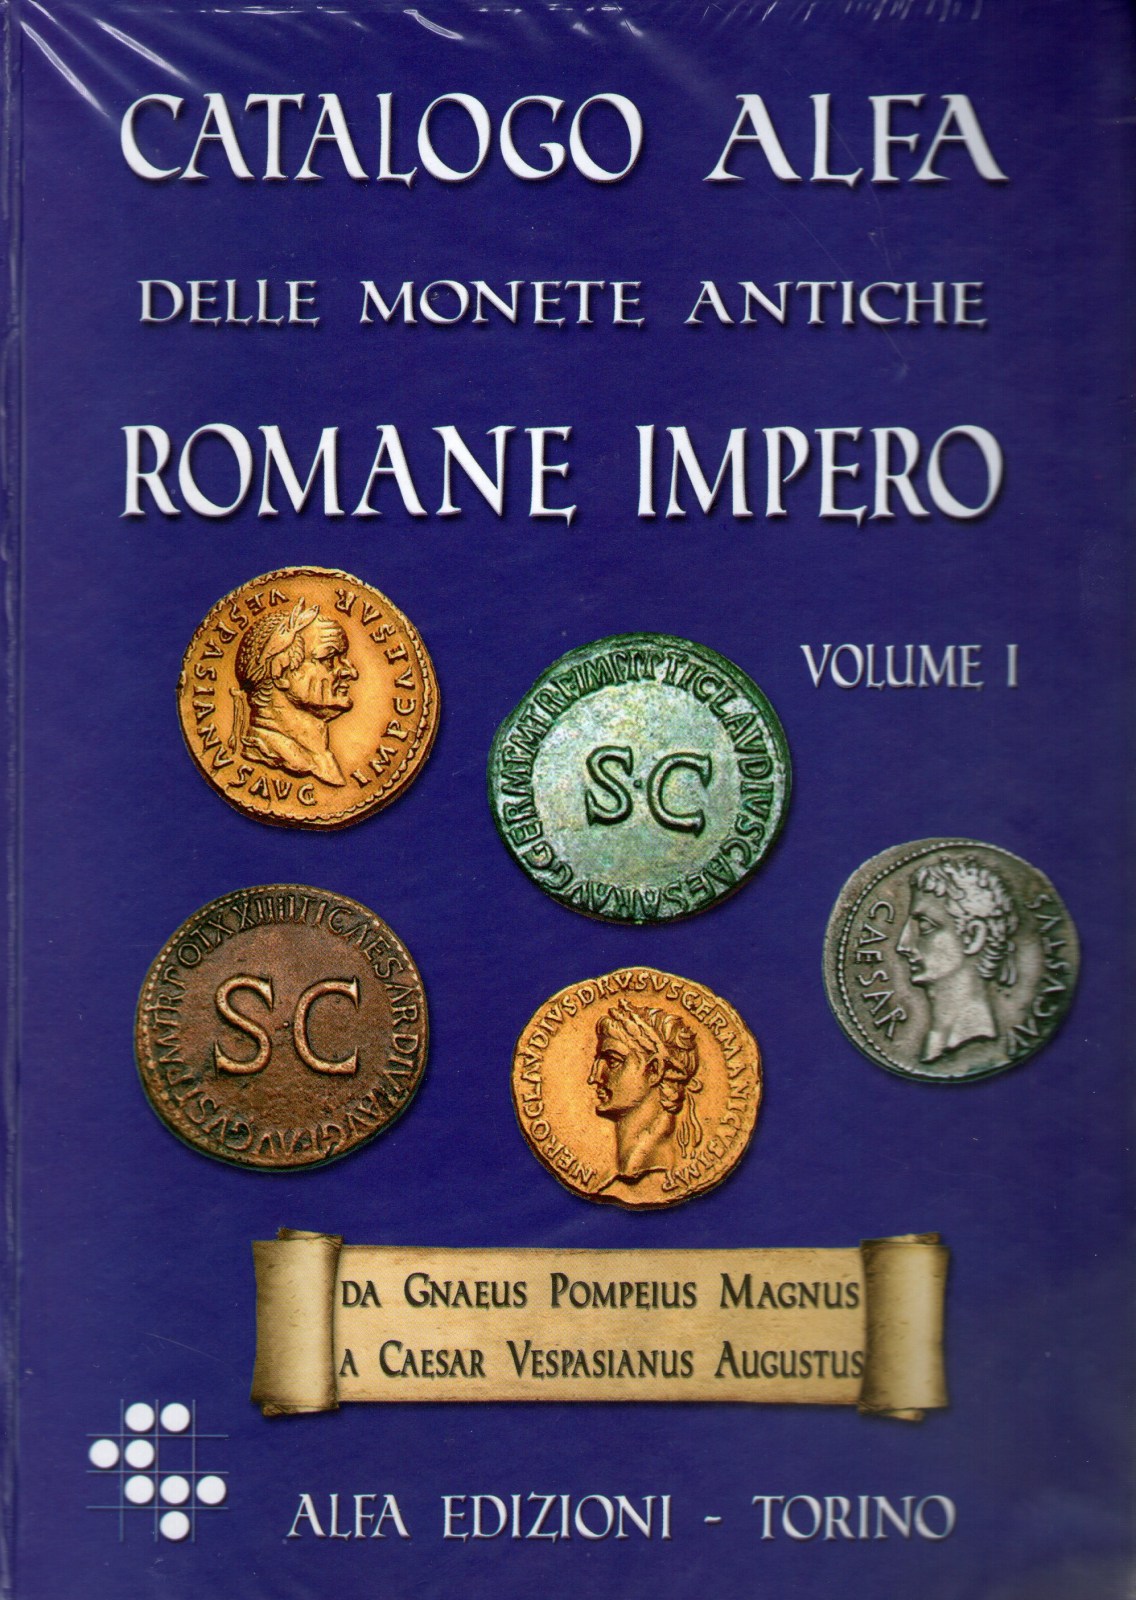 vol.1 catalogo alfa romane impero